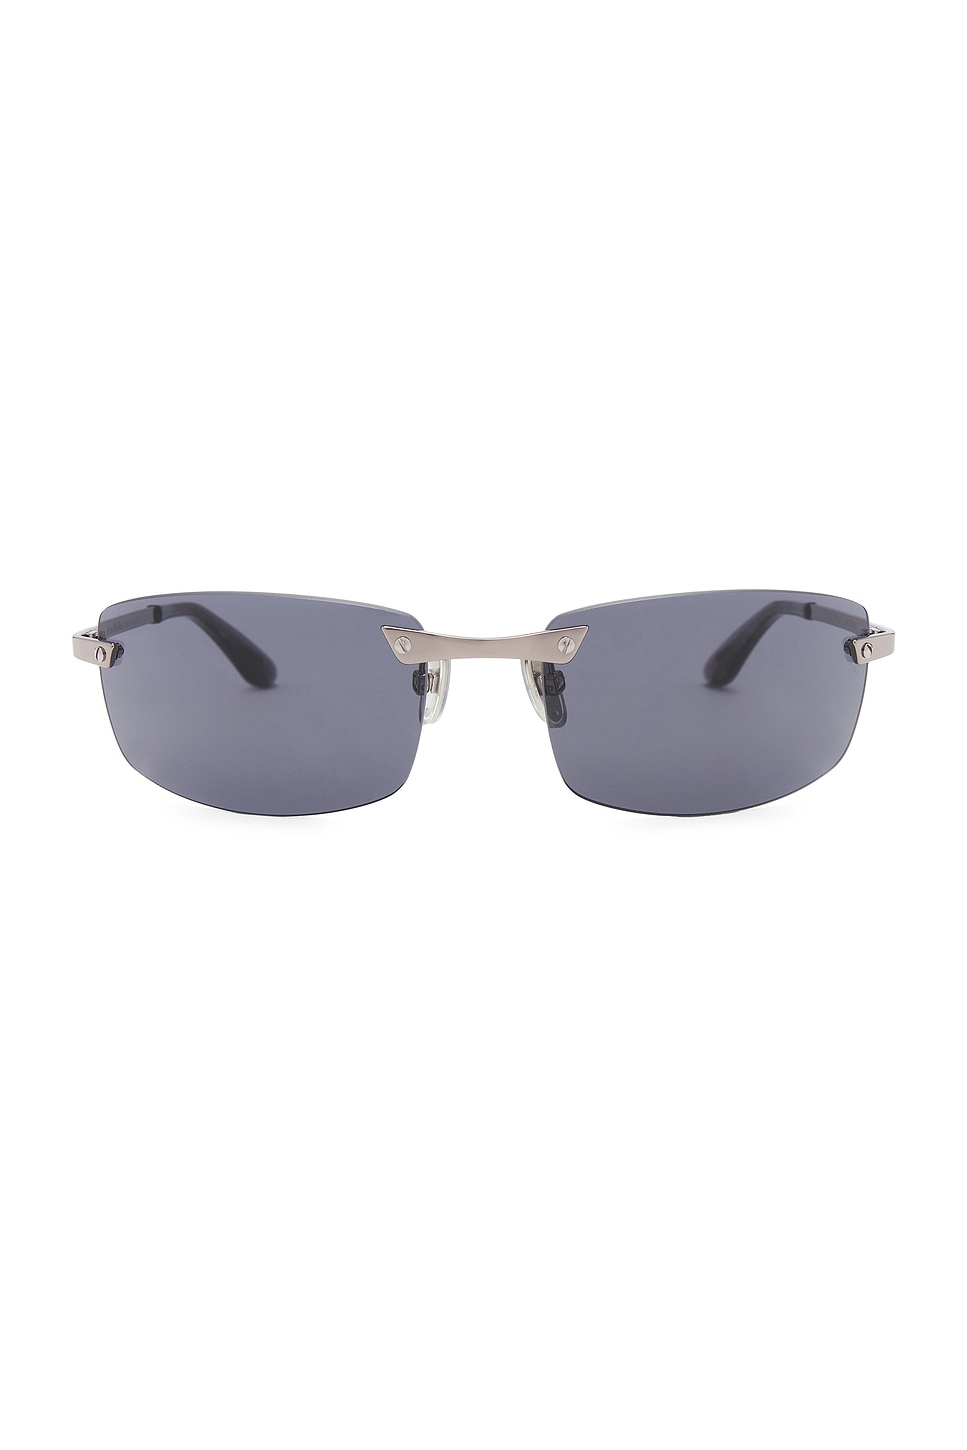 Acne Studios Sunglasses In Grey